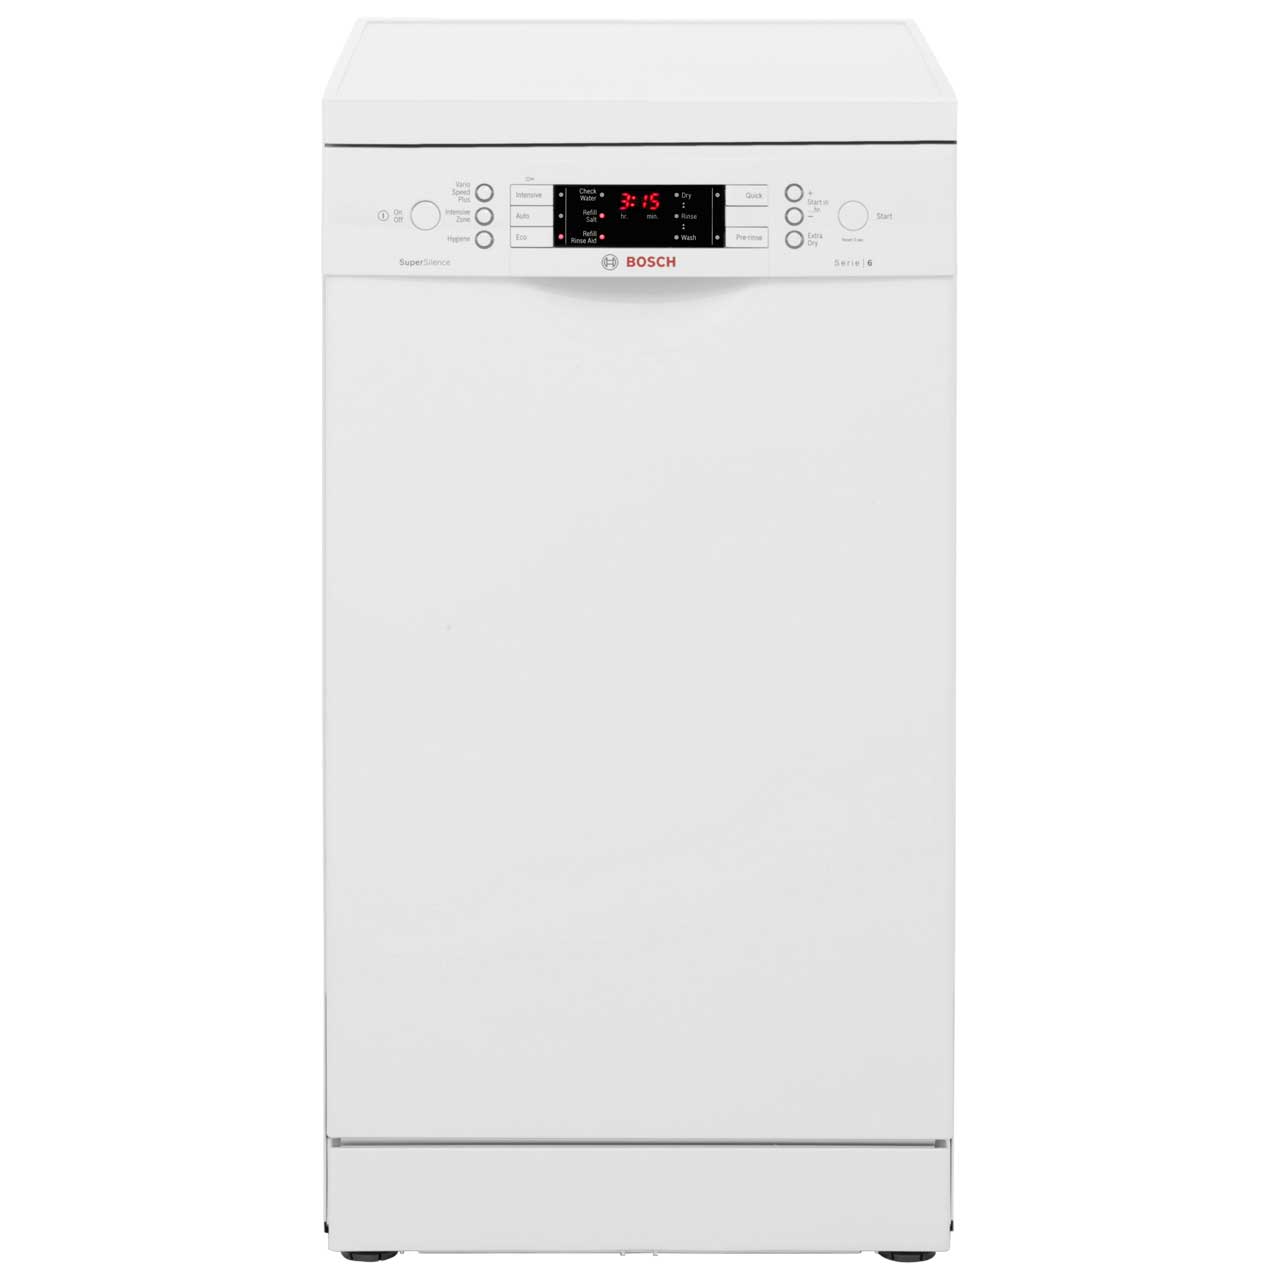 Bosch Serie 6 SPS59T02GB Free Standing Slimline Dishwasher in White